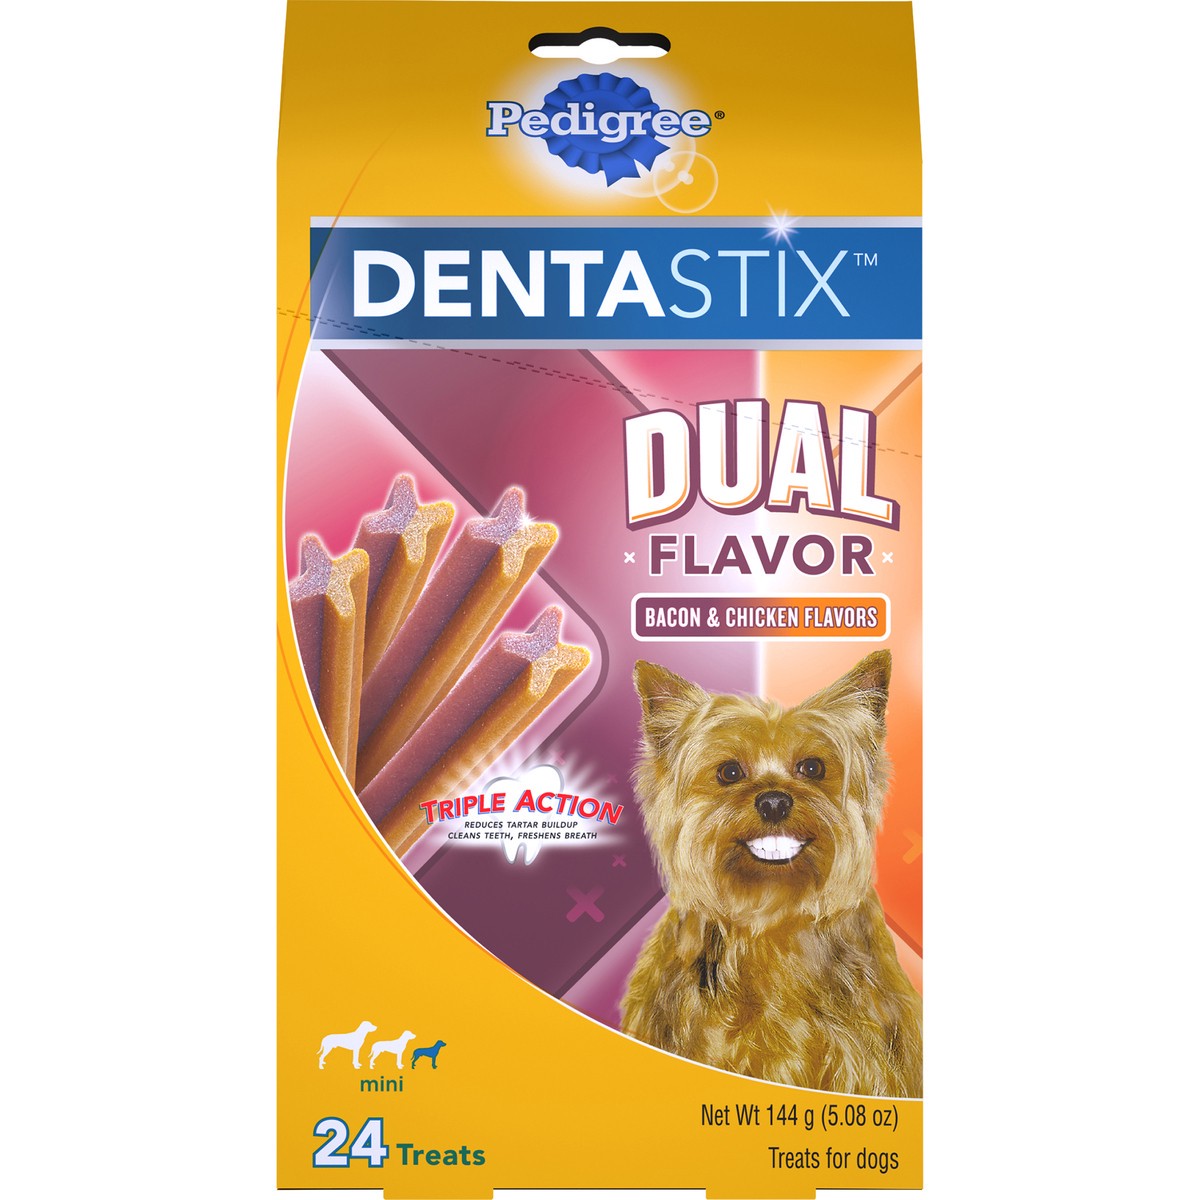 slide 3 of 14, Pedigree Dentastix Dual Flavor Bacon & Chicken Flavors Mini Treats for Dogs 5.08 oz. Box, 5.08 oz